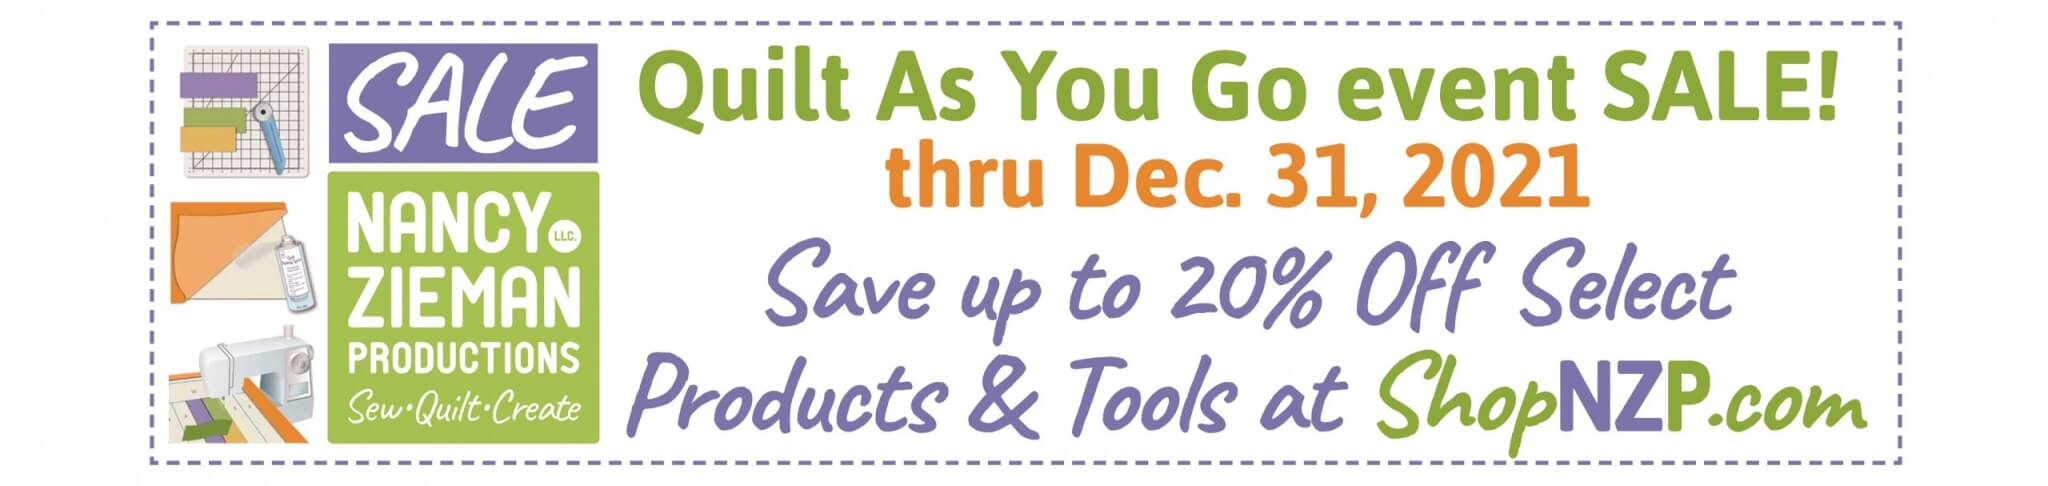 Quilt As You Go event SALE thru Dec 31, 2021 at Nancy Zieman Producitons at ShopNZP.com